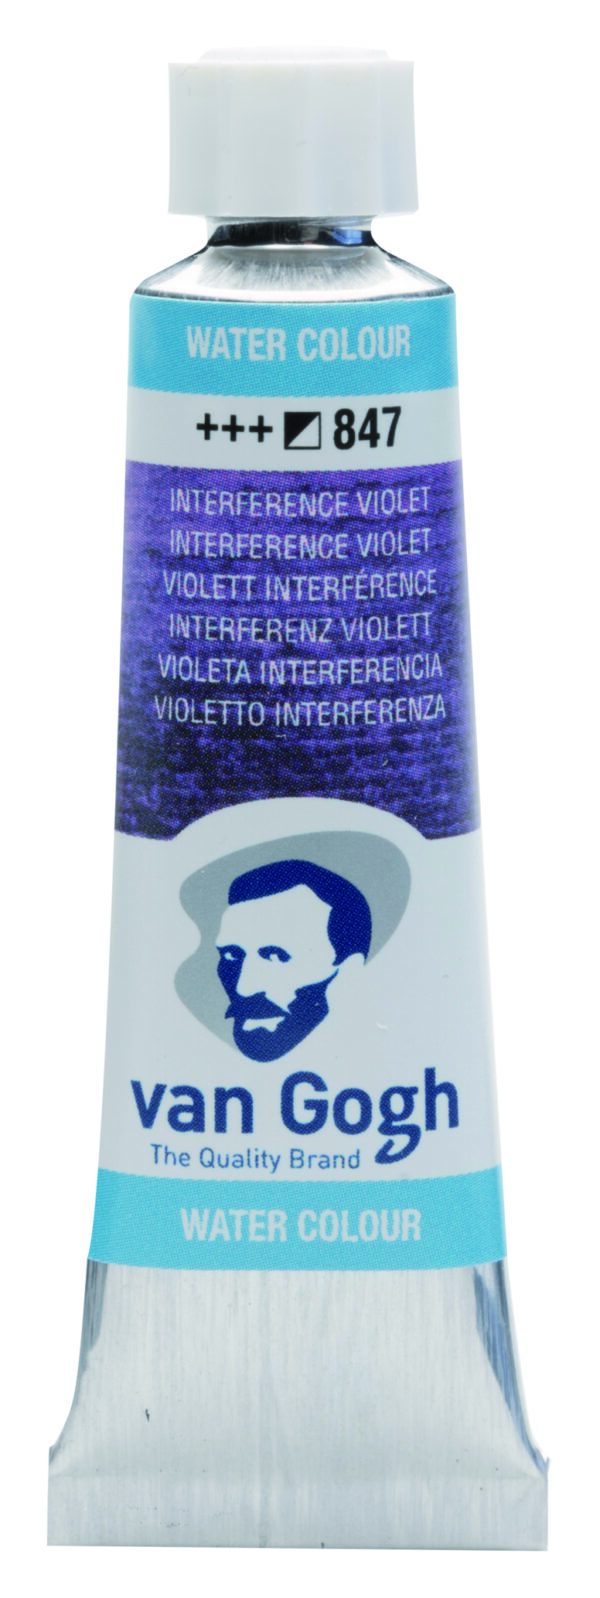 Van Gogh 847 Interference Violet - 10 ml